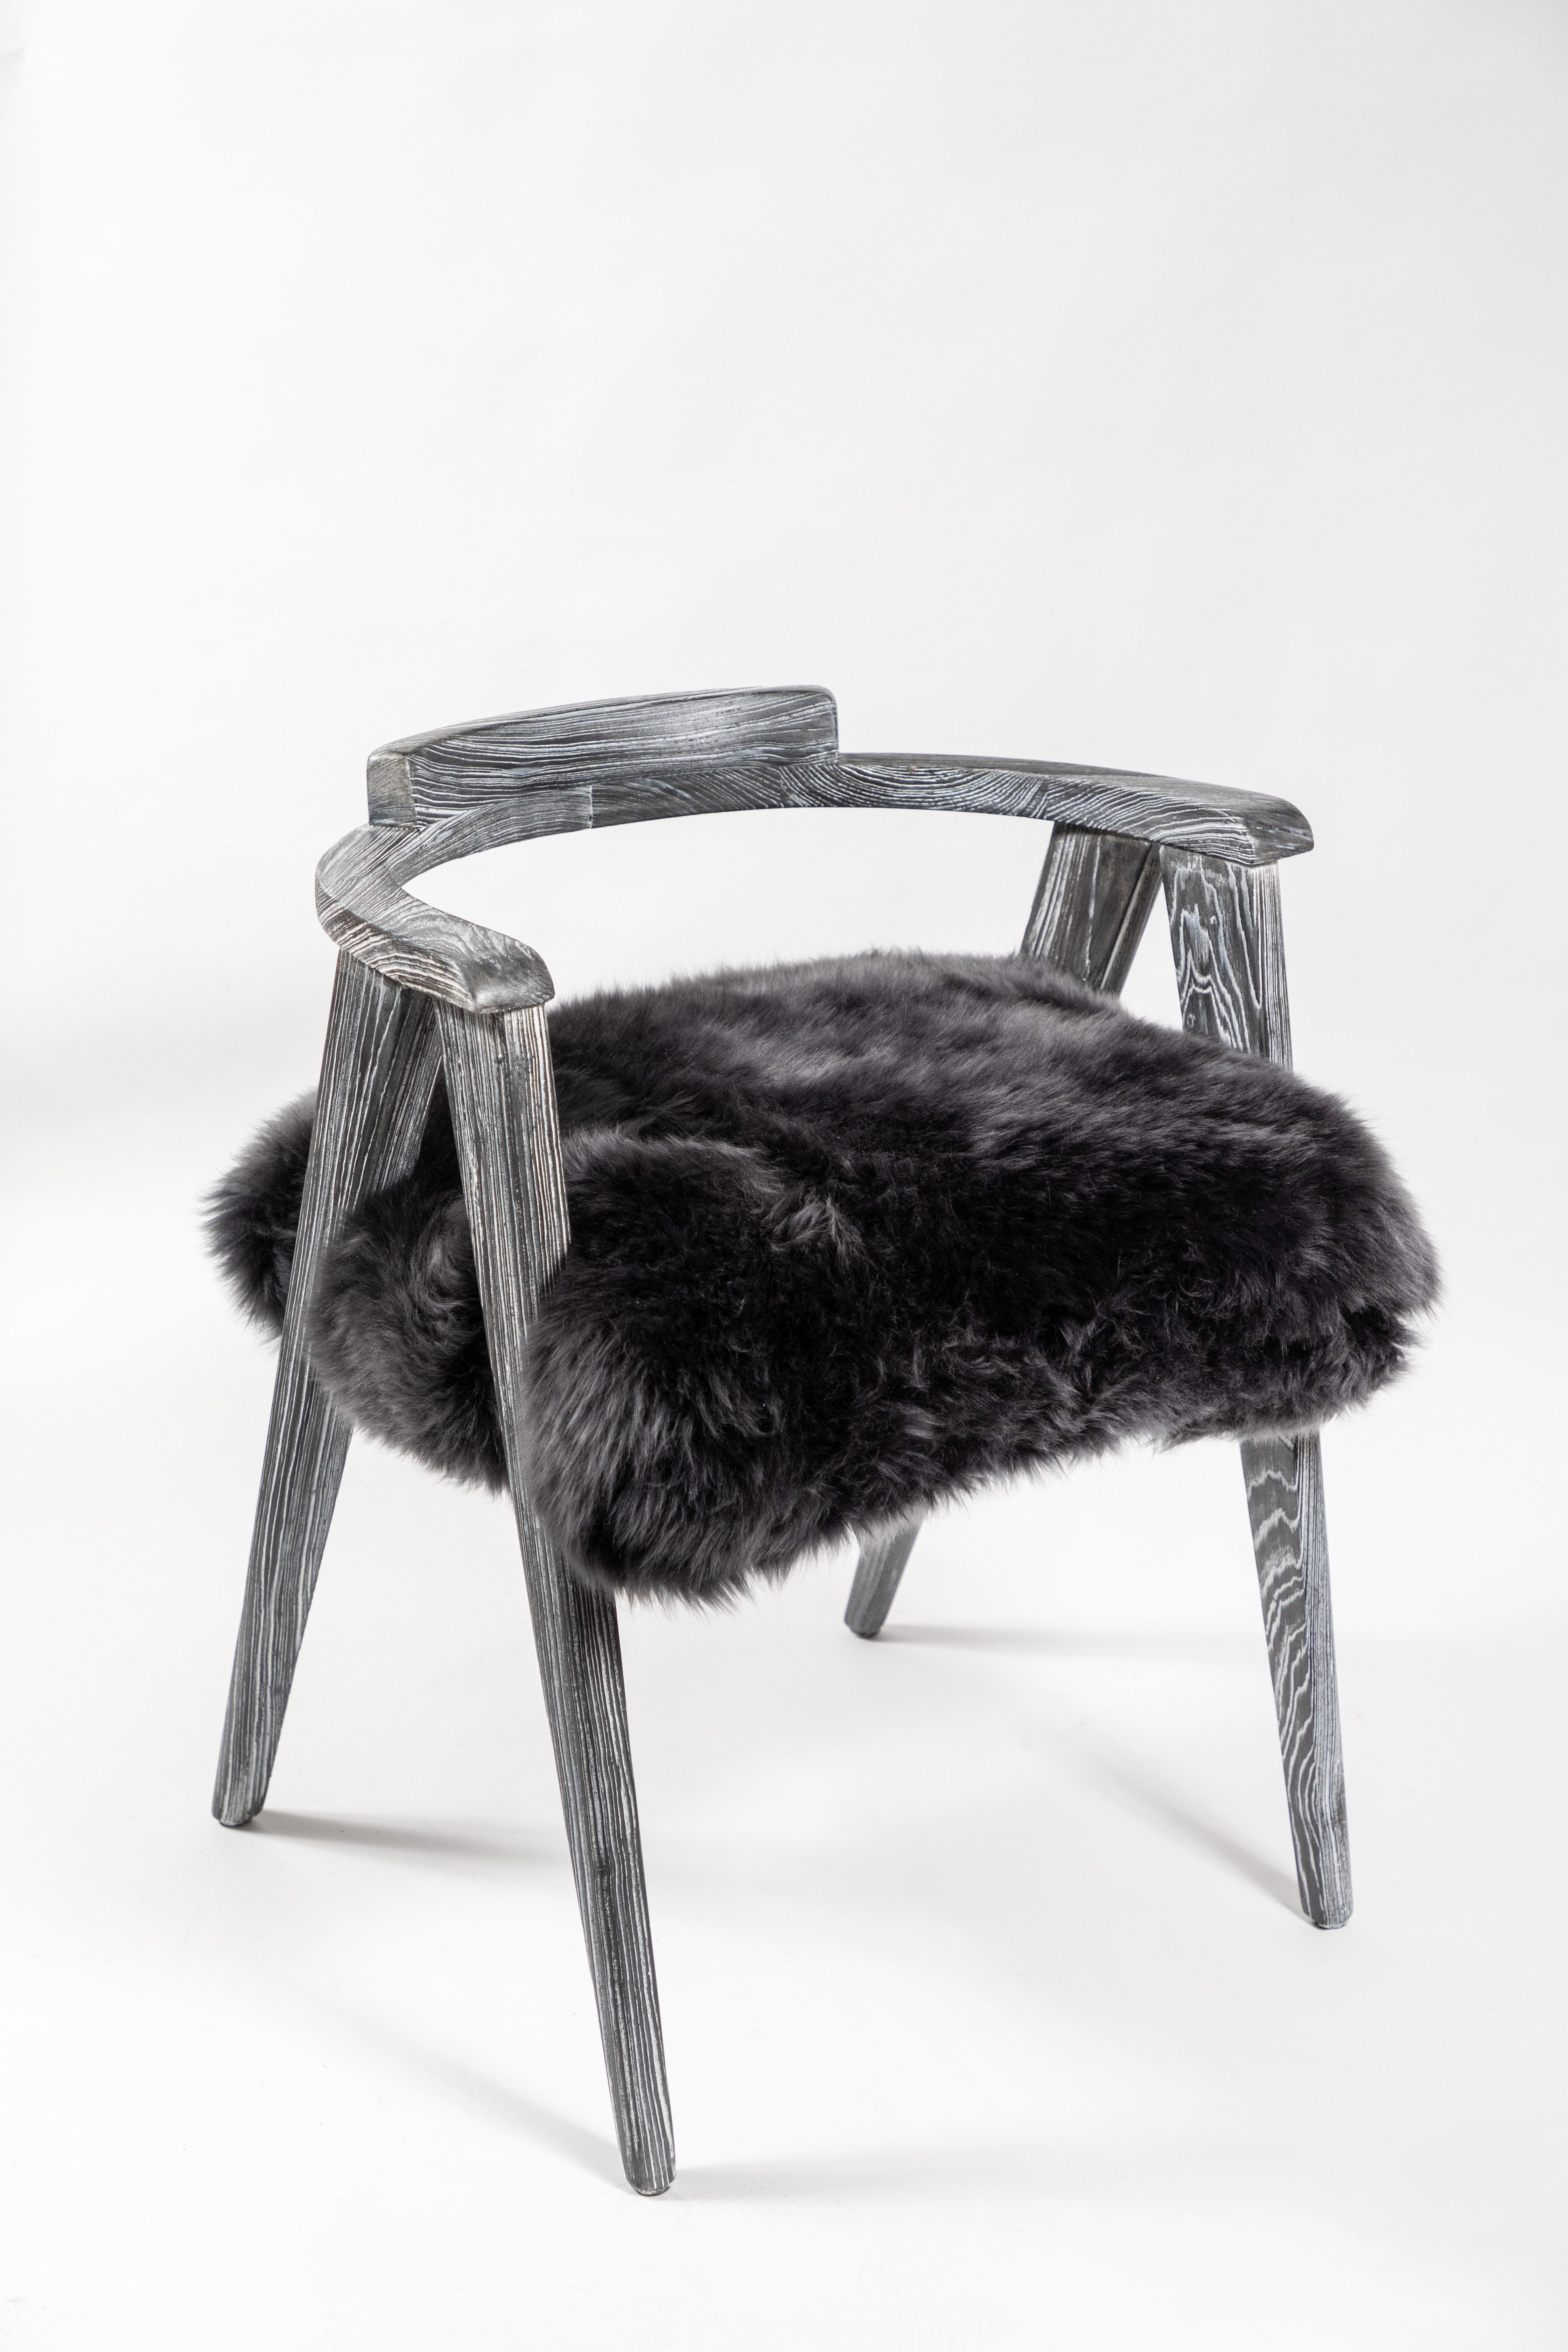 American Pair of Midcentury Cerused Wood and Fur Scissor Leg Chairs